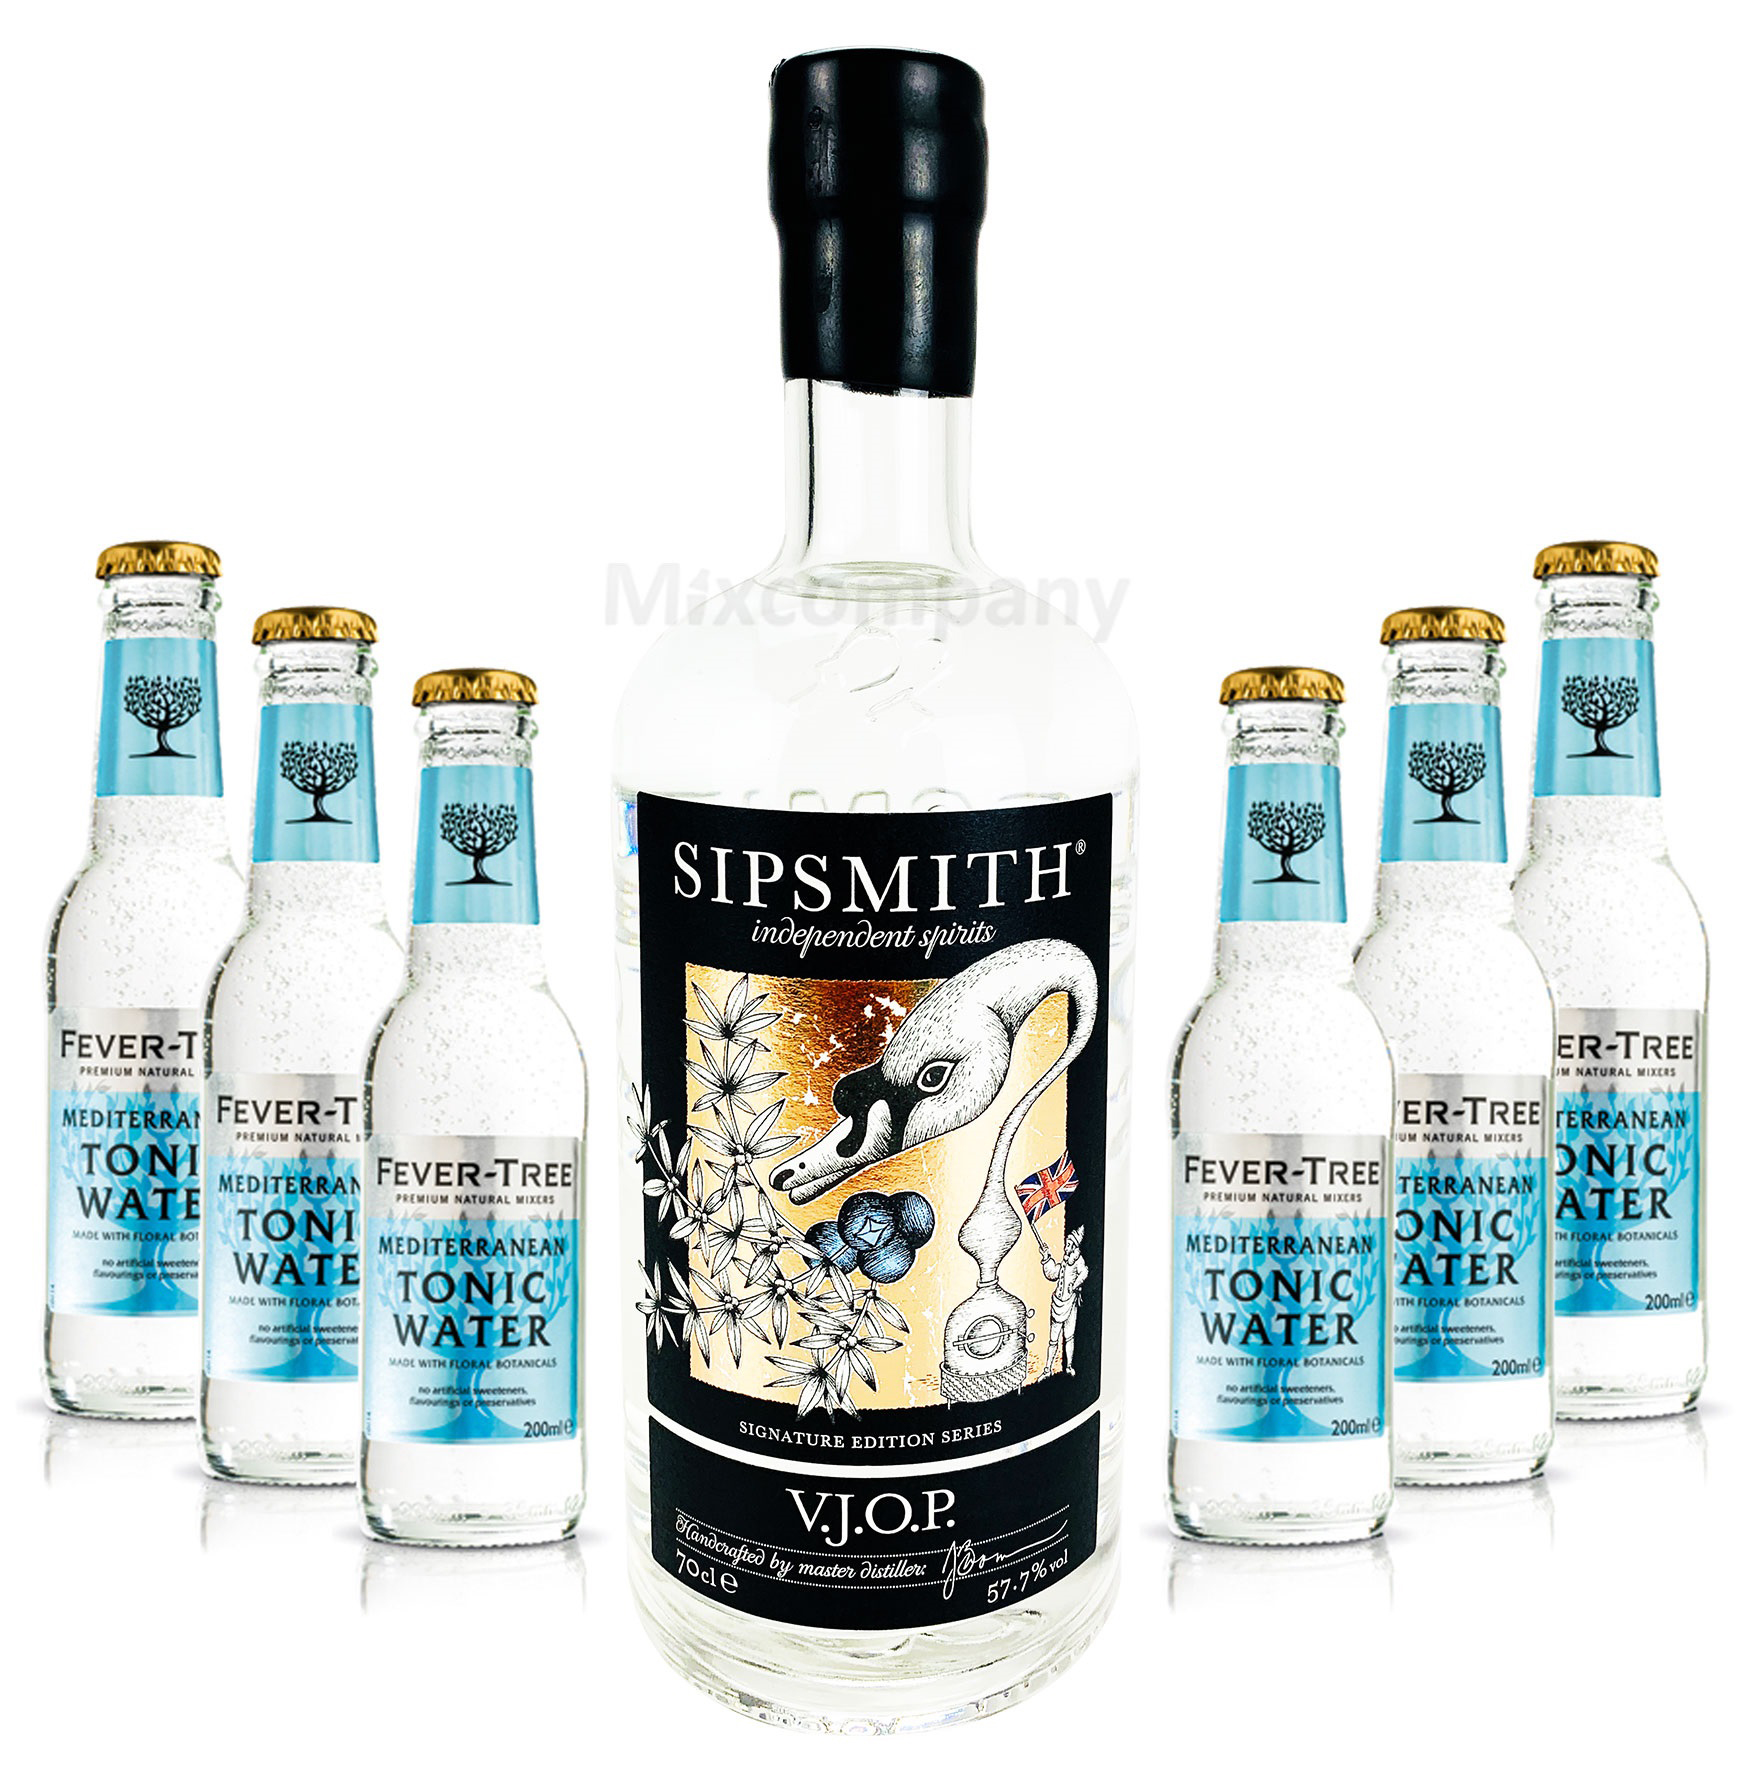 Sipsmith V.J.O.P. Gin 0,7l (57,7% Vol)+ 6x Fever-Tree Mediterranean Tonic Water 0,2 MEHRWEG Bar Longdrink Cocktail Sammlung Gin Tonic inkl. PFAND- [Enthält Sulfite]